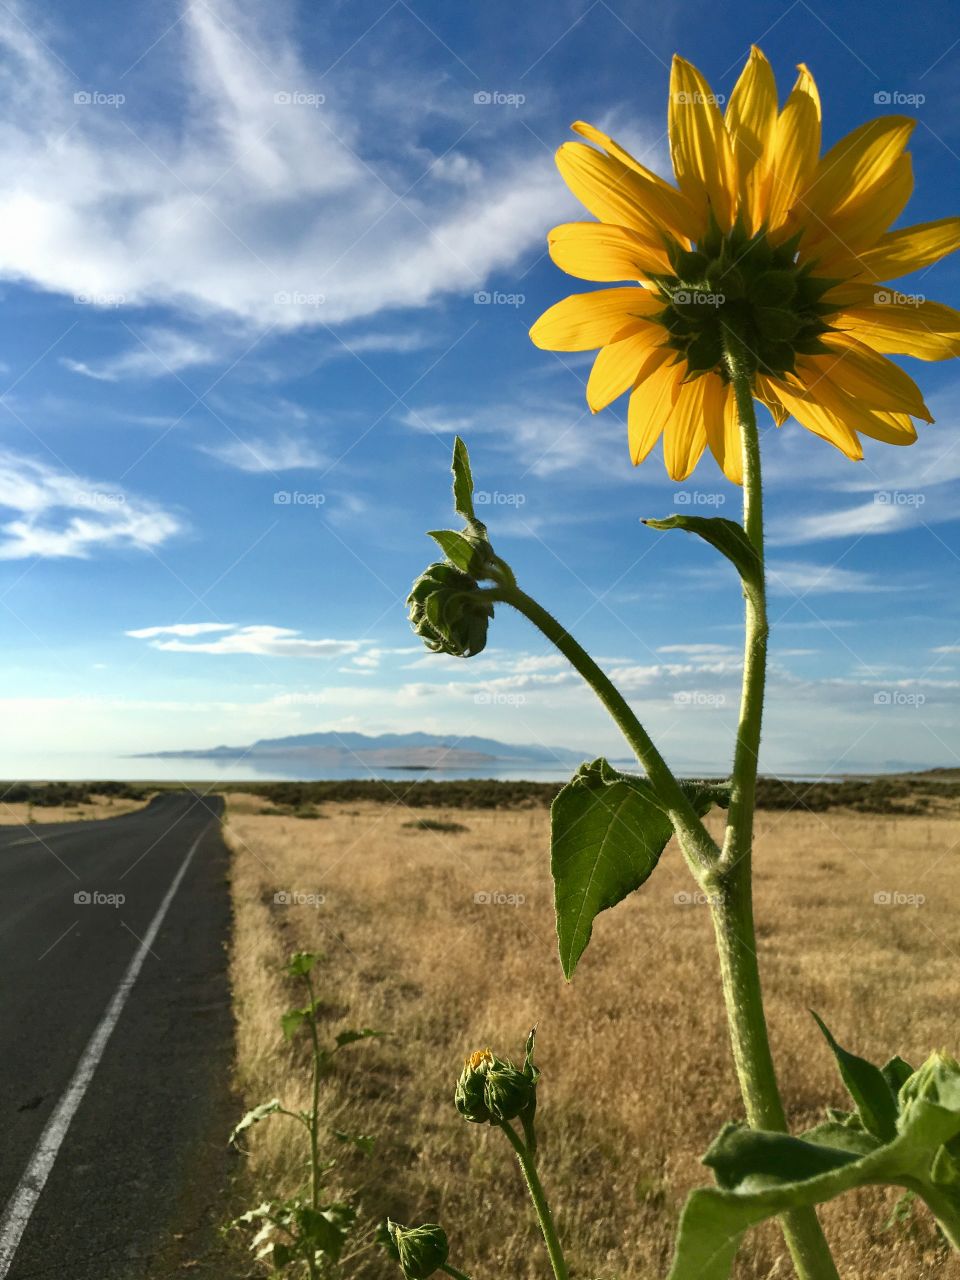 Beautiful view. Bright yellow sunflower. Antelope Island. Great Salt Lake. Utah. Beautiful evening. Beautiful blue sky. Road leading to beauty.